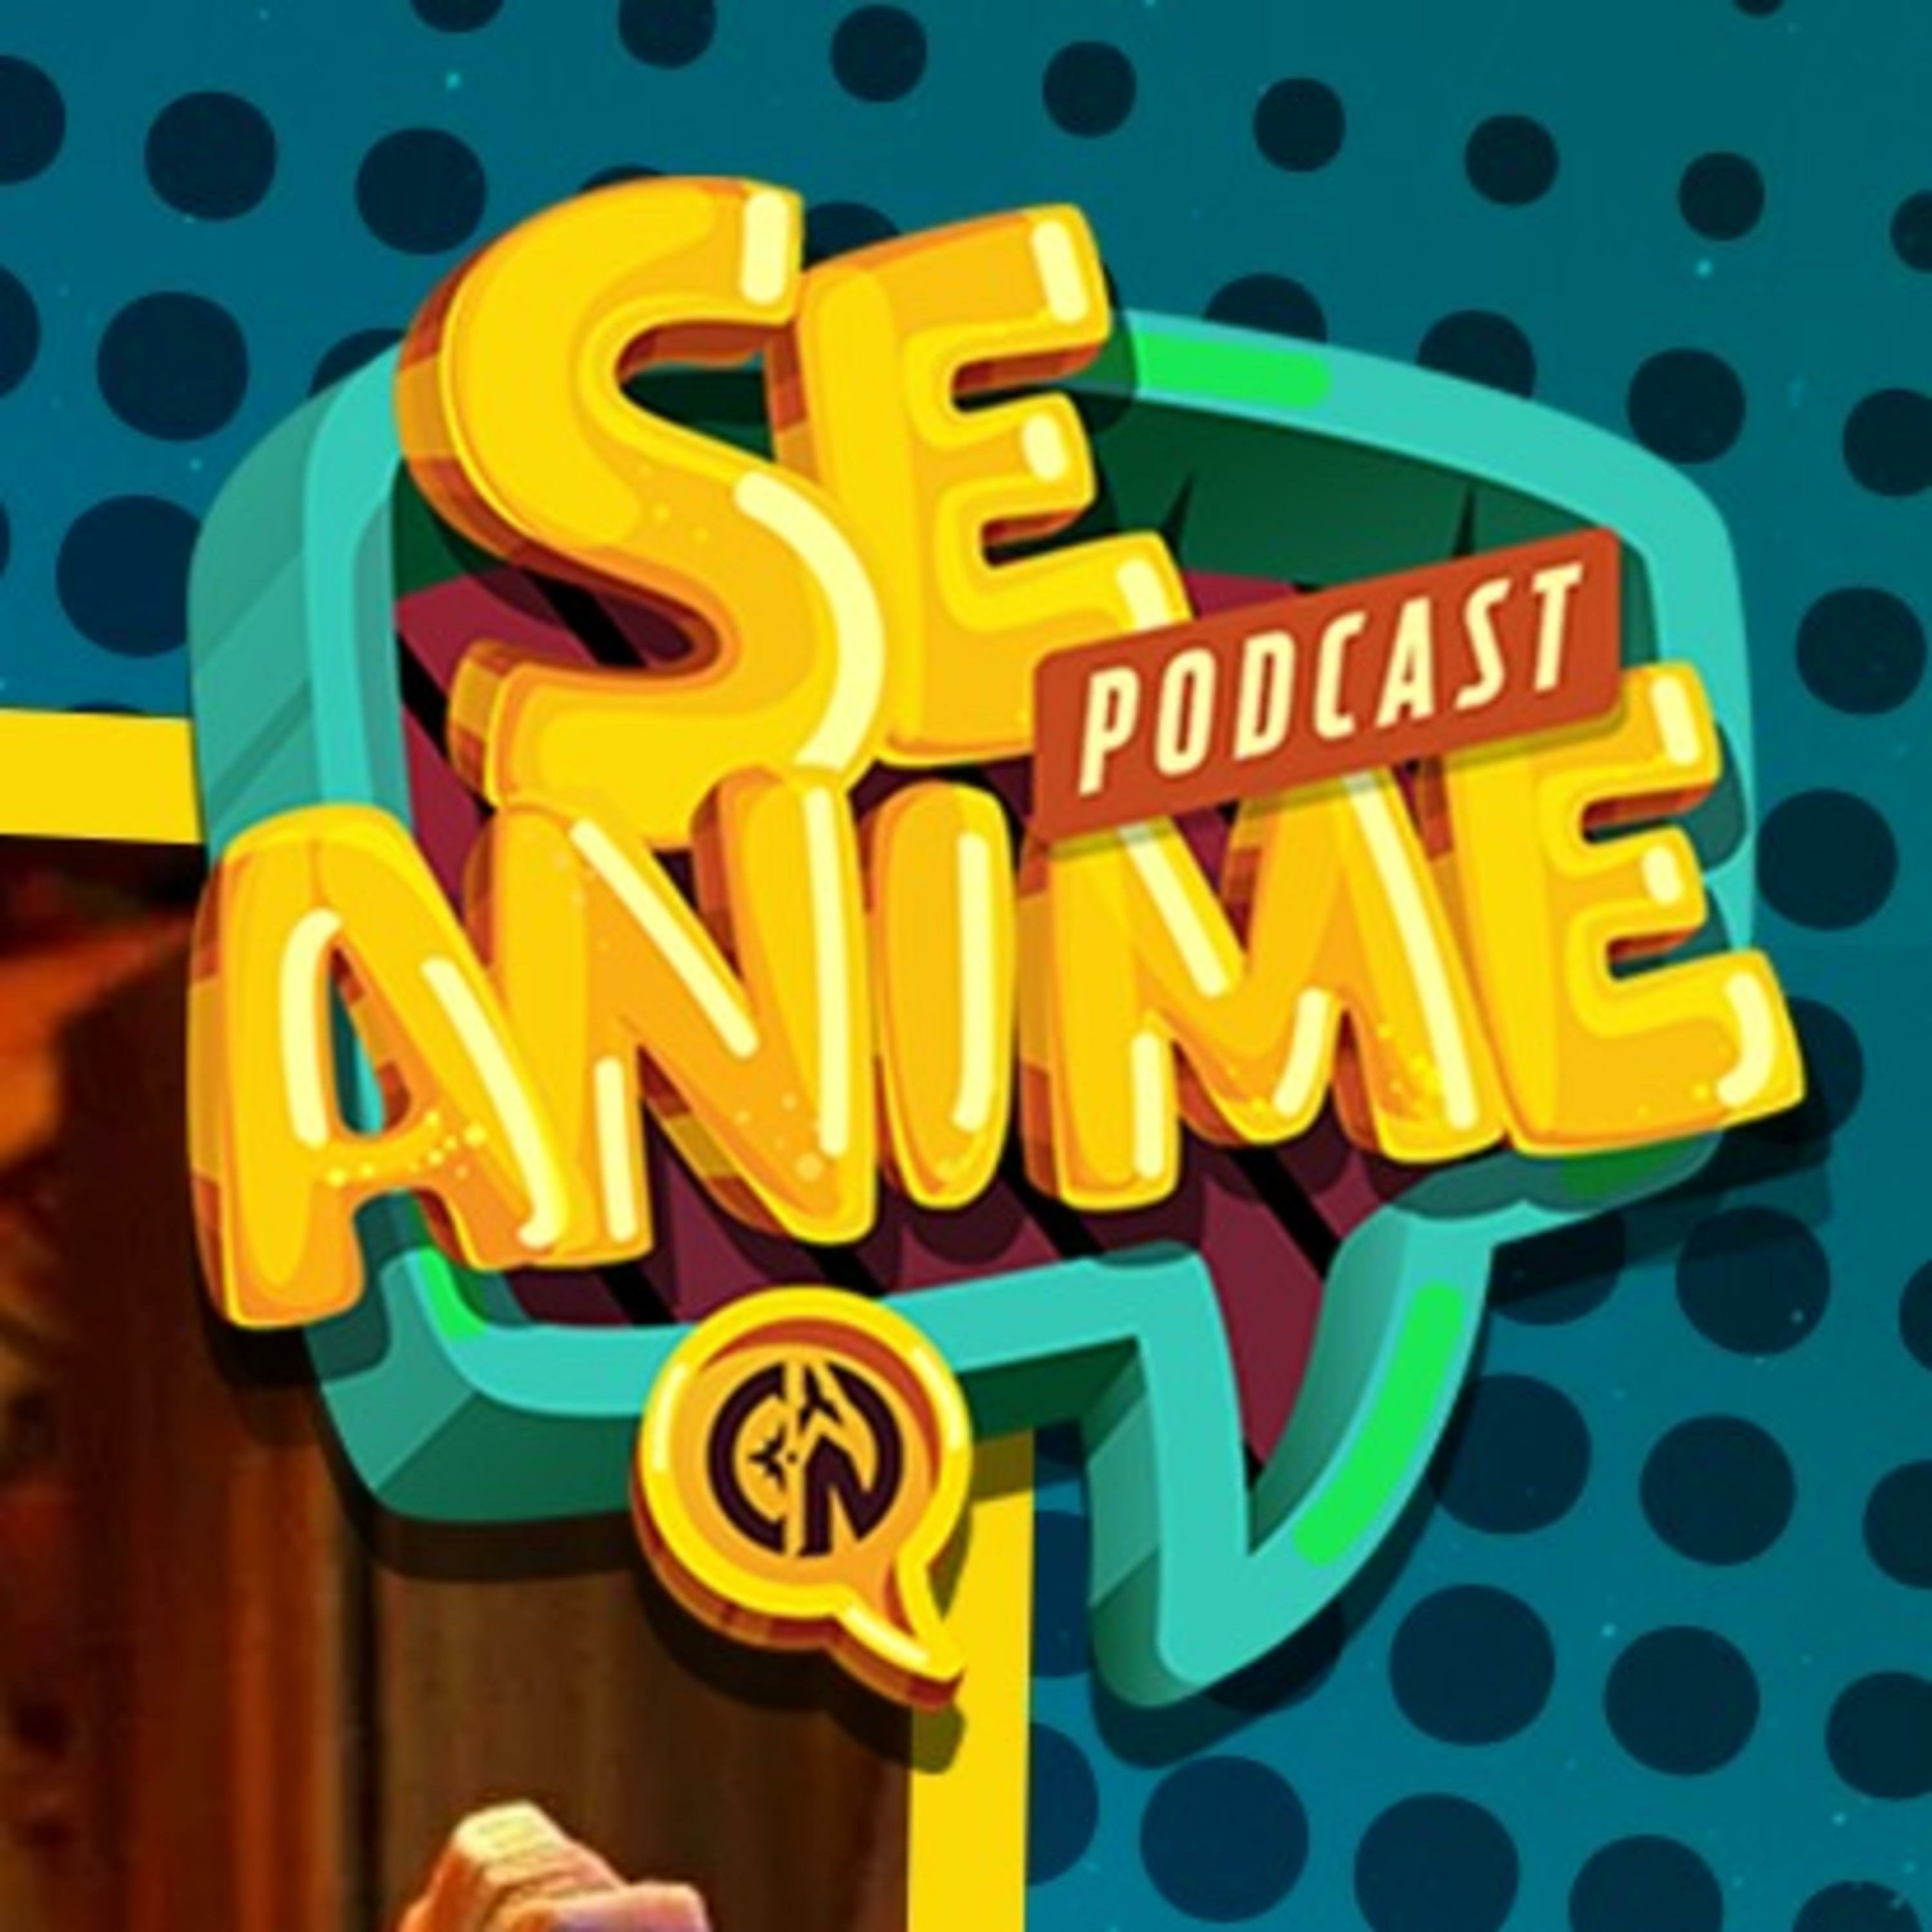 Oki Anime Podcast : Oki Anime: Amazon.in: Audible Books & Originals